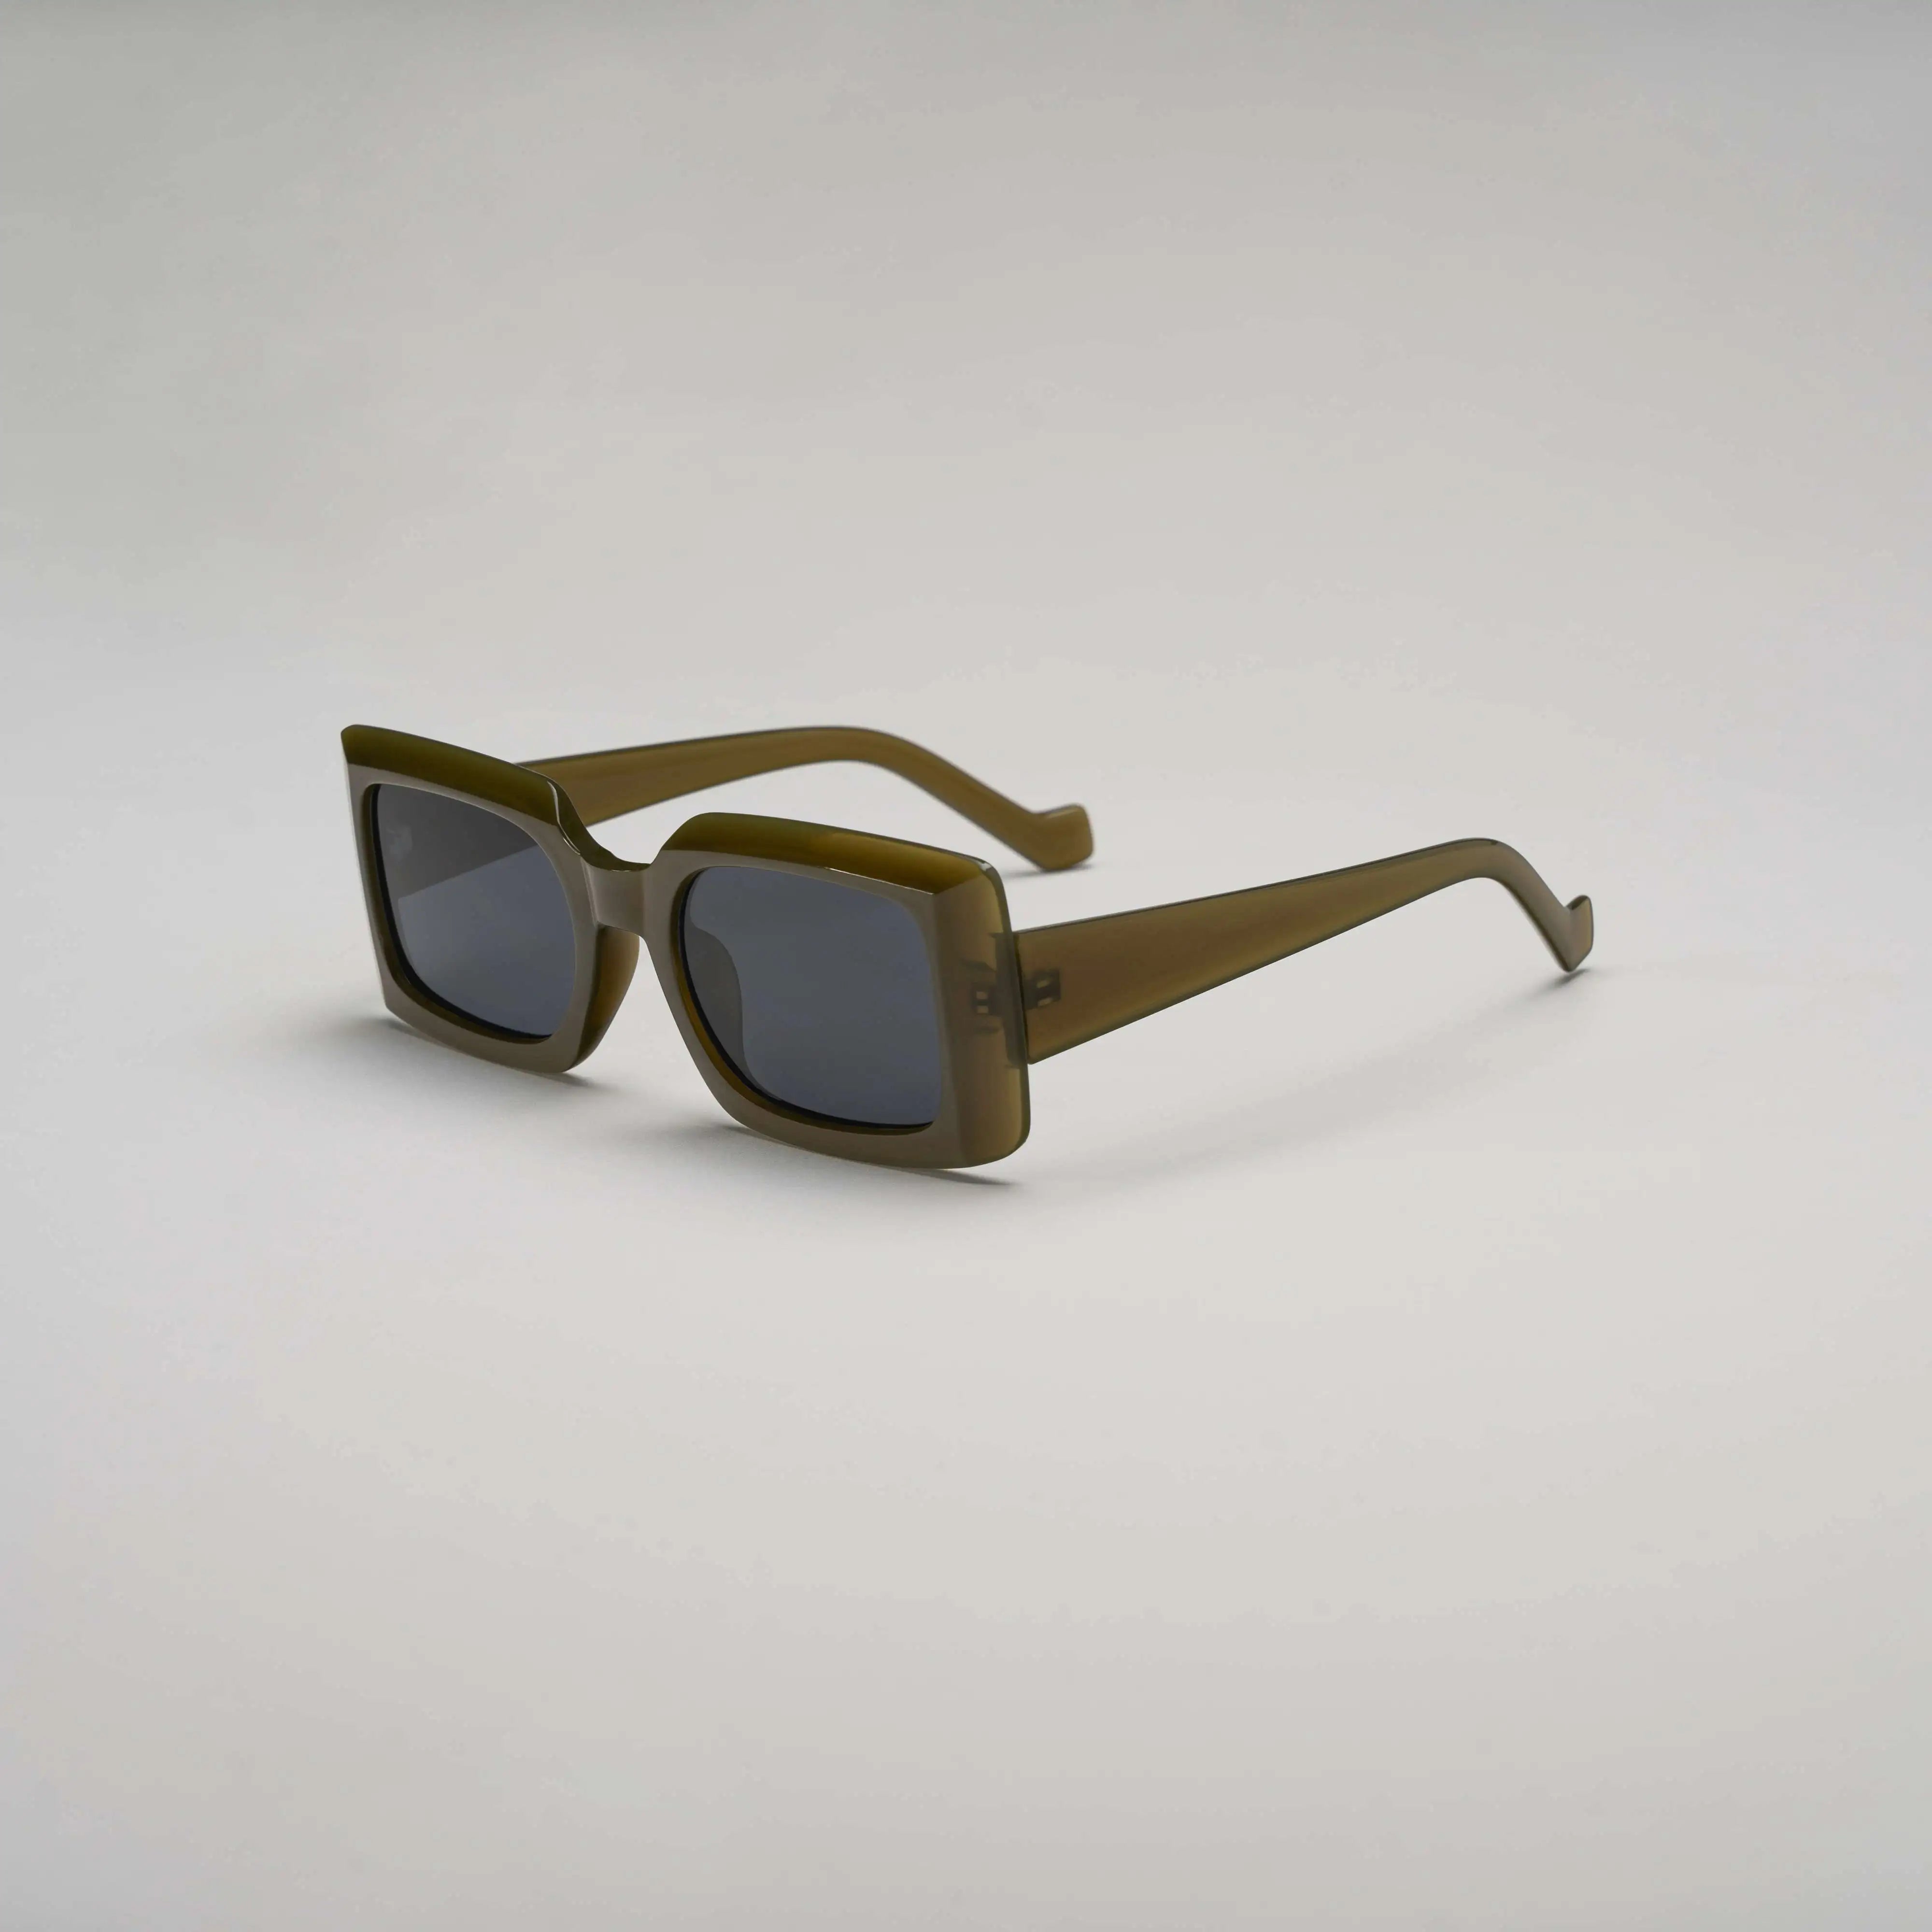 'The Depot' Retro Square Sunglasses in Khaki & Black